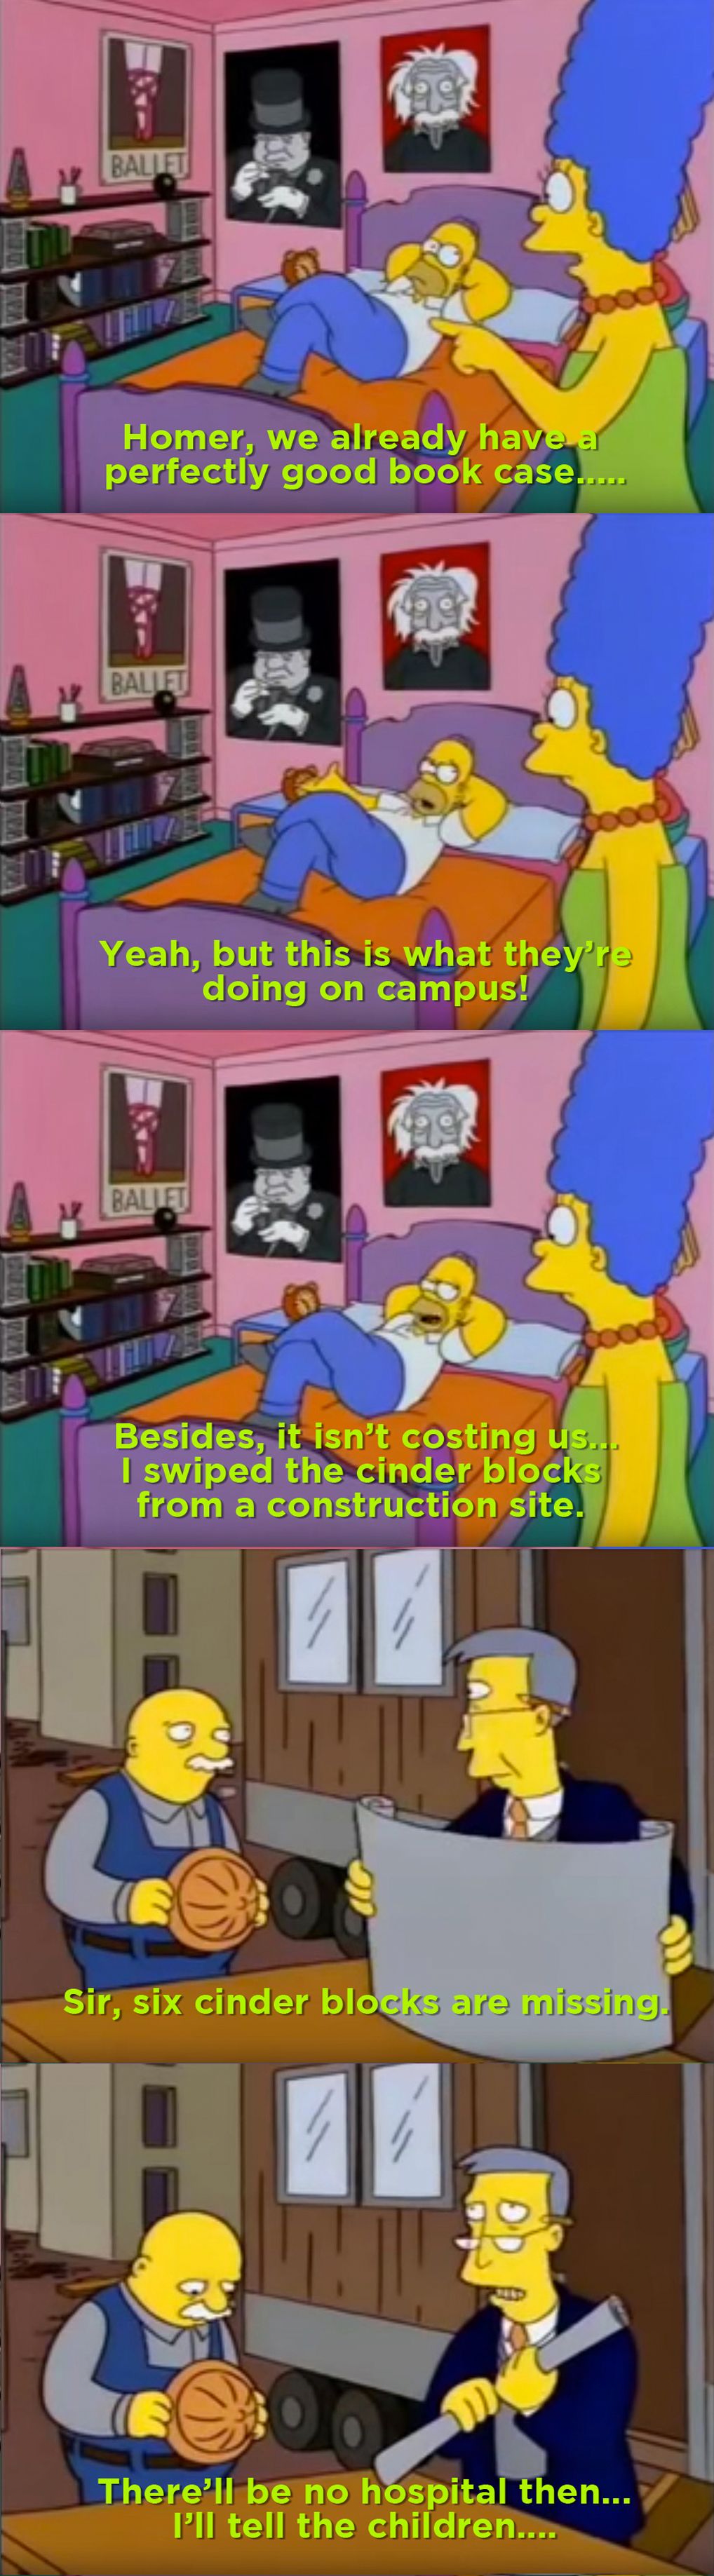 Homer's dorm room inspired furniture